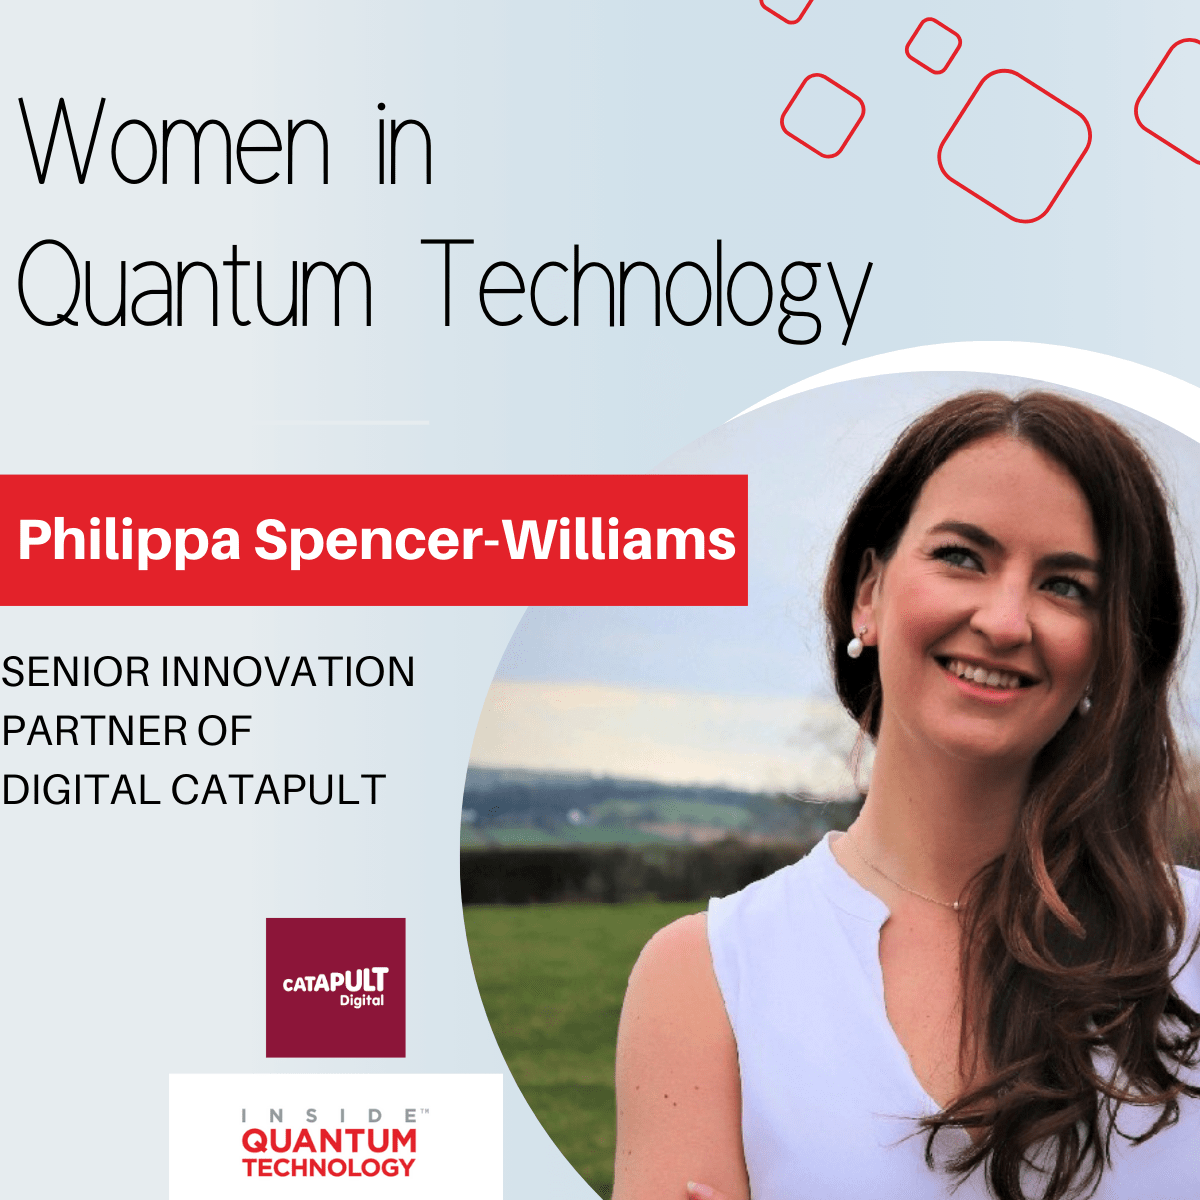 Phillipa Spencer Williams, Senior Innovation Partner at Digital Catapult, shares her insights on the quantum industry.